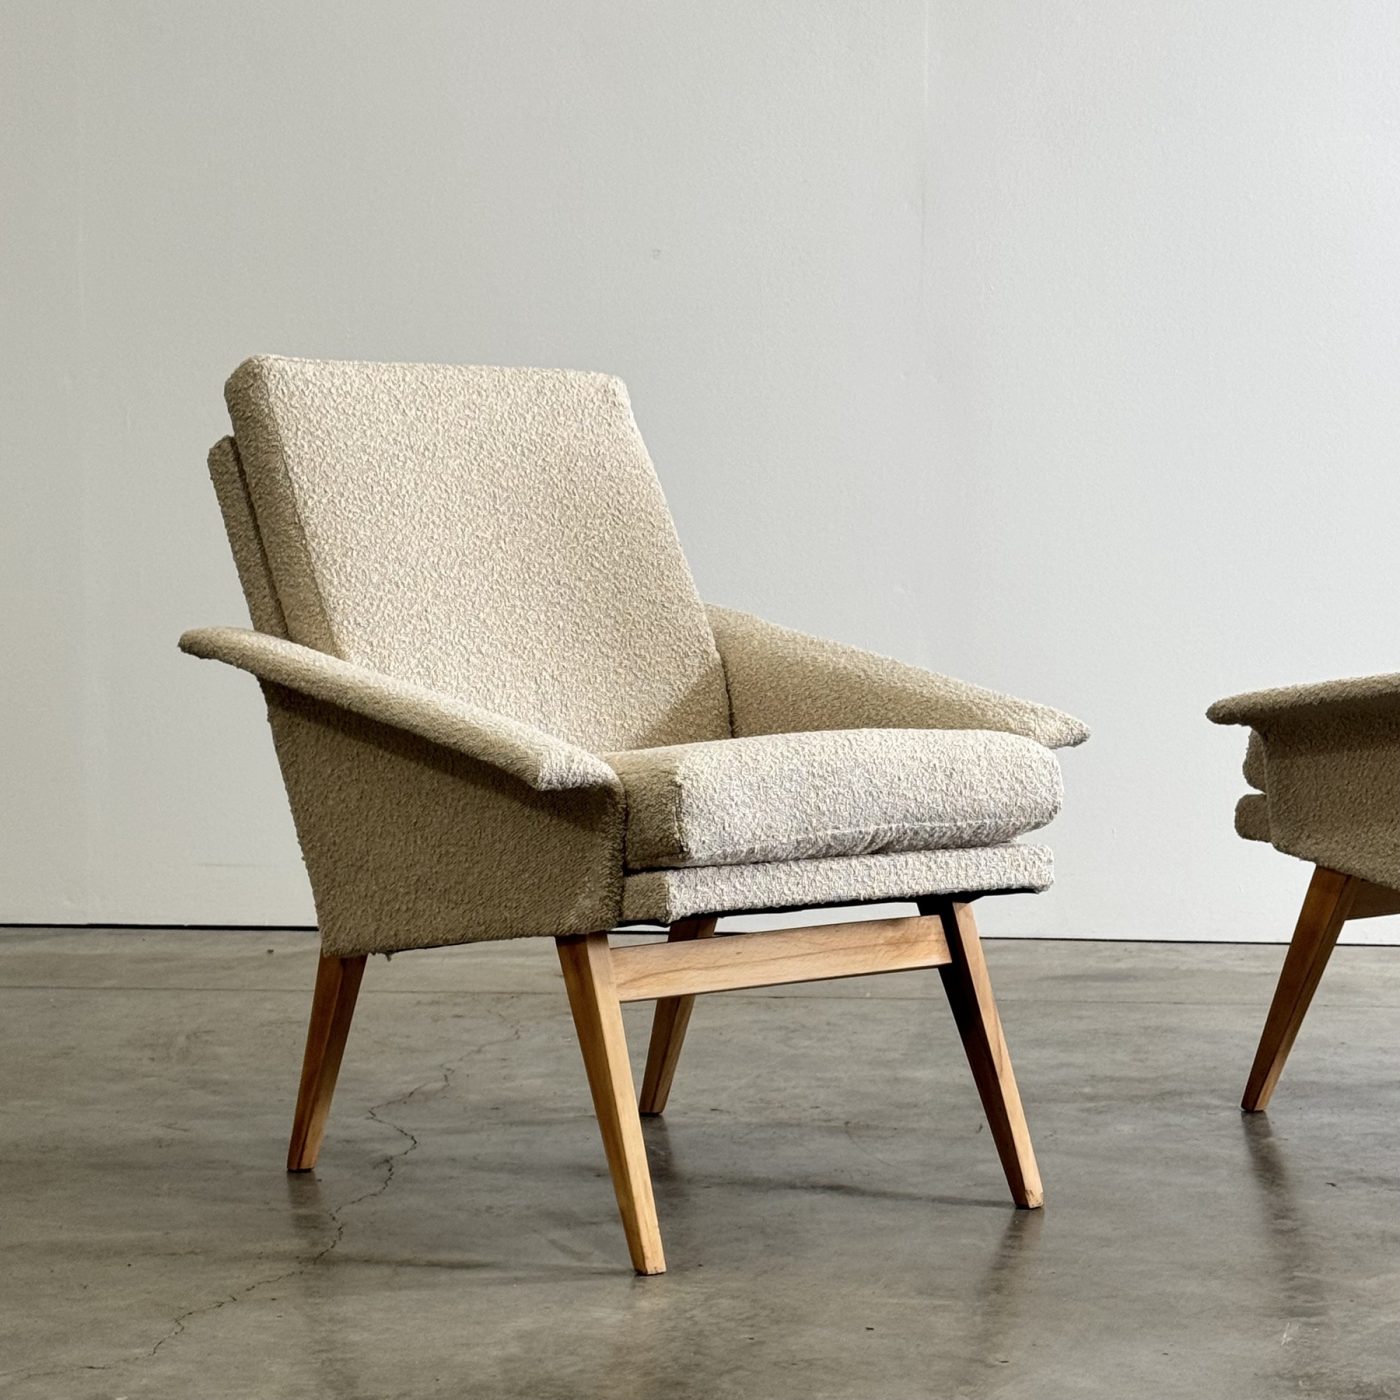 objet-vagabond-vintage-armchairs0007